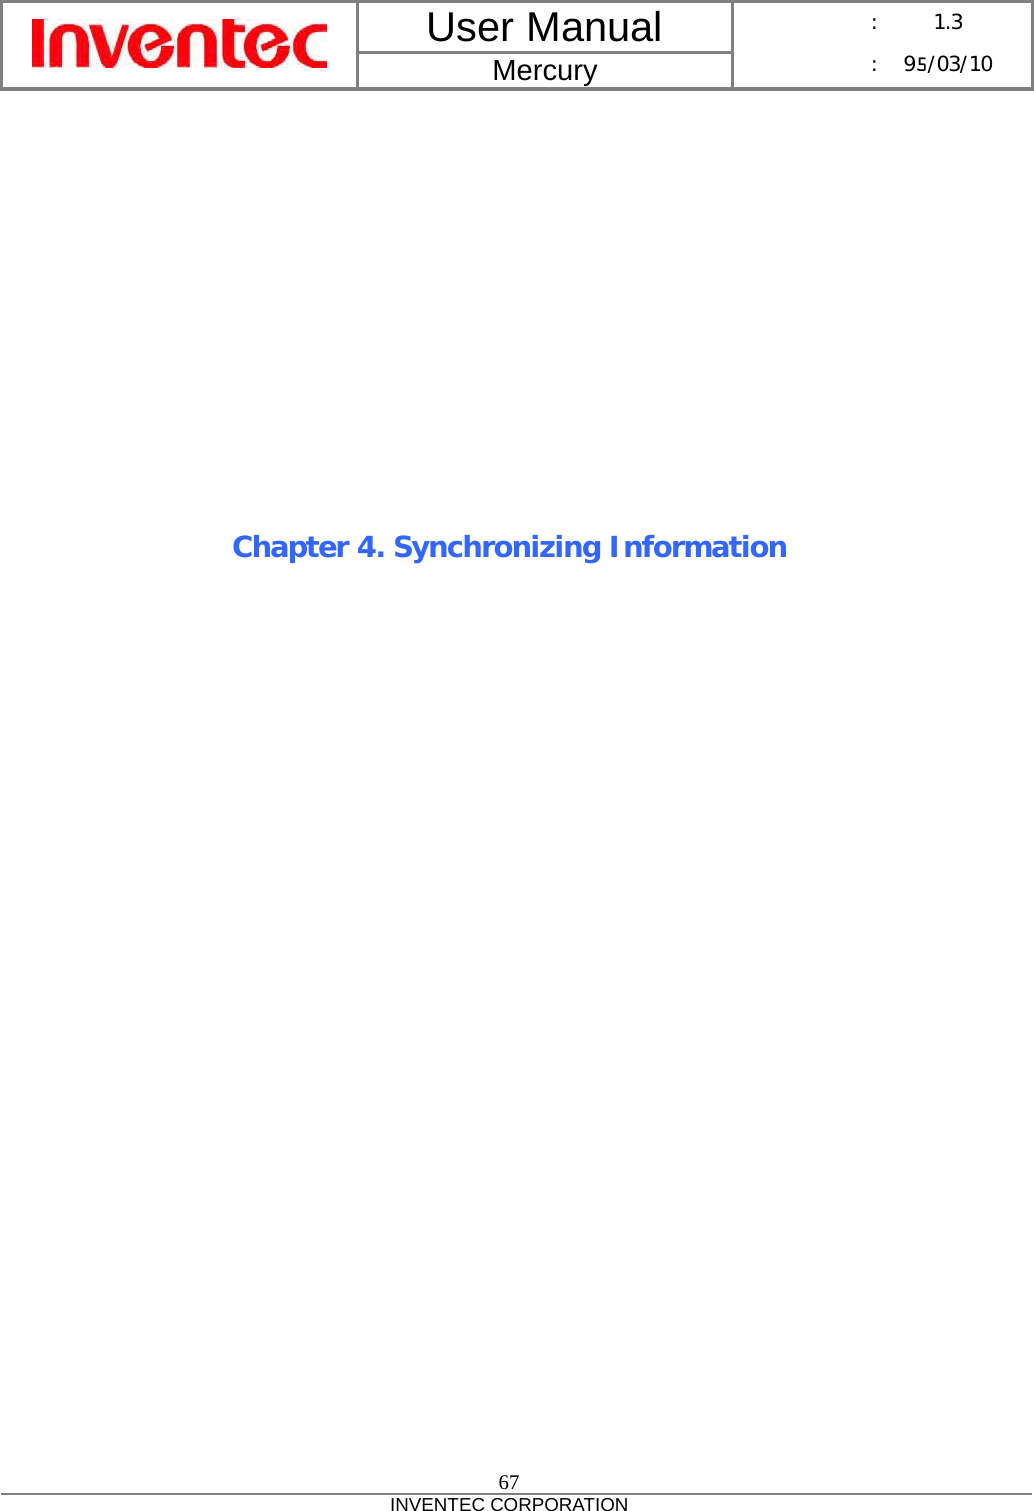 User Manual  Mercury      :  1.3      : 95/03/10  67 INVENTEC CORPORATION              Chapter 4. Synchronizing Information 